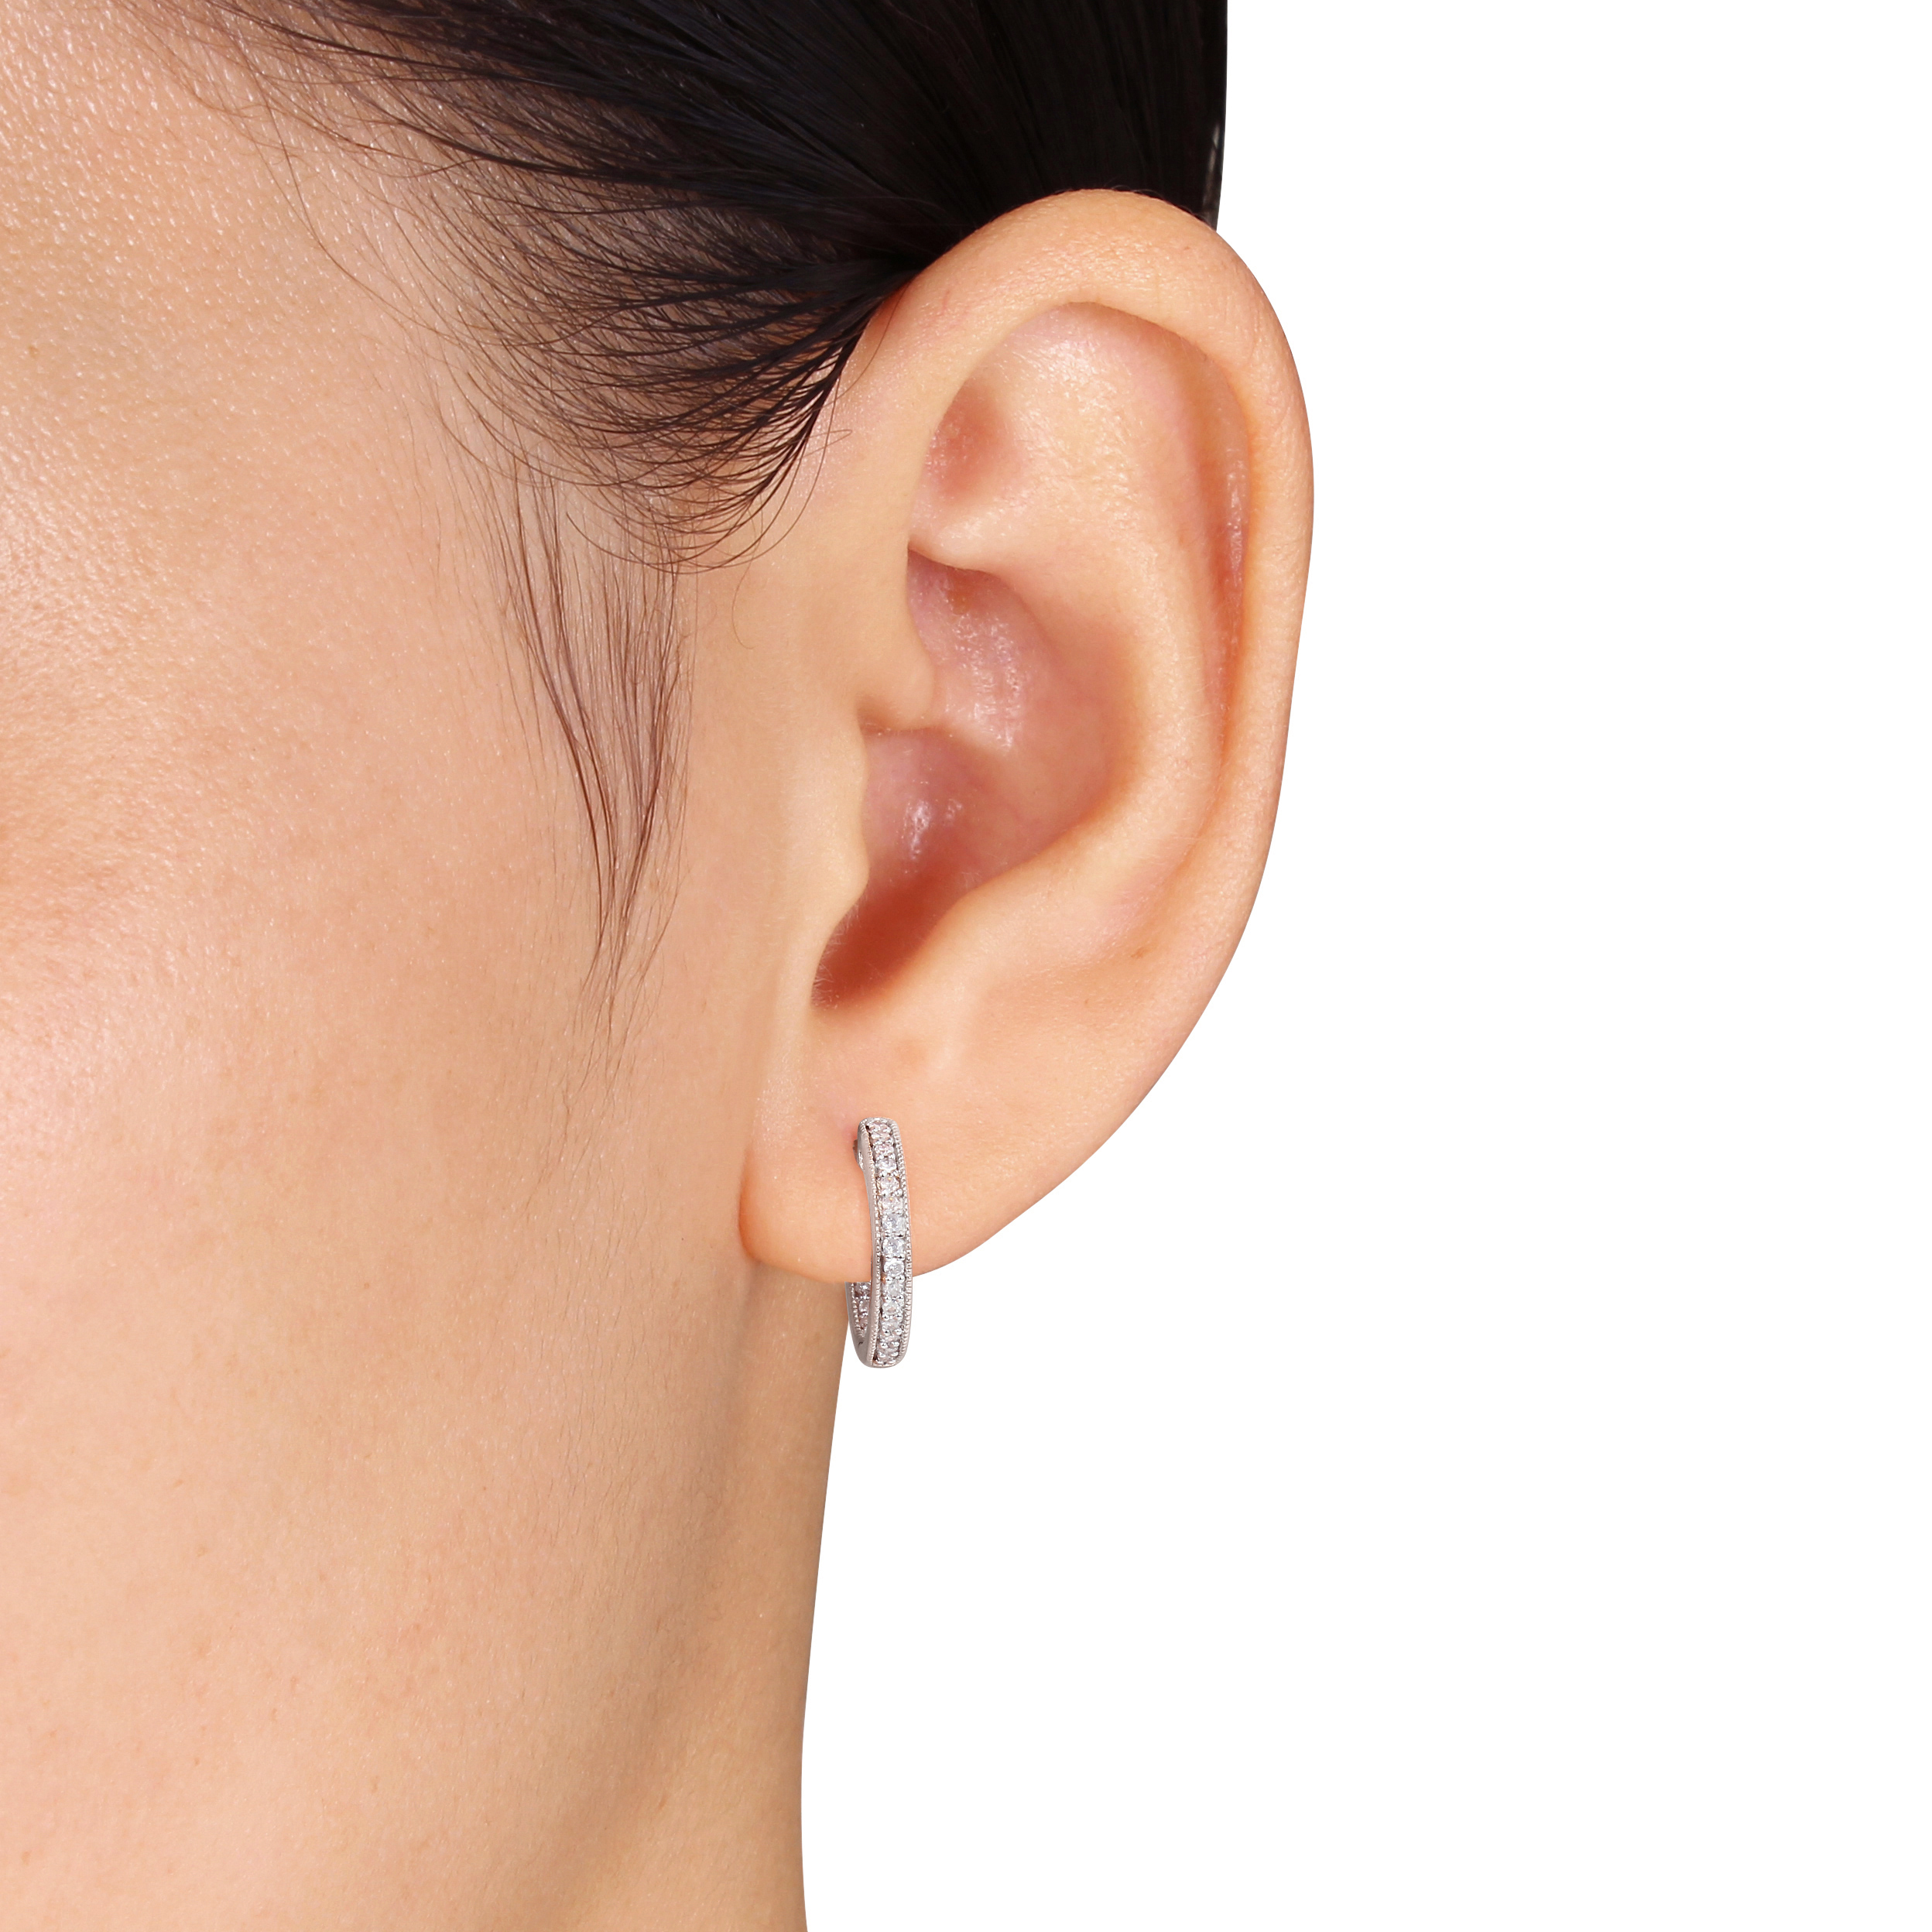 1/4 CT TW Inside Outside Diamond Hoop Earrings in 14k White Gold